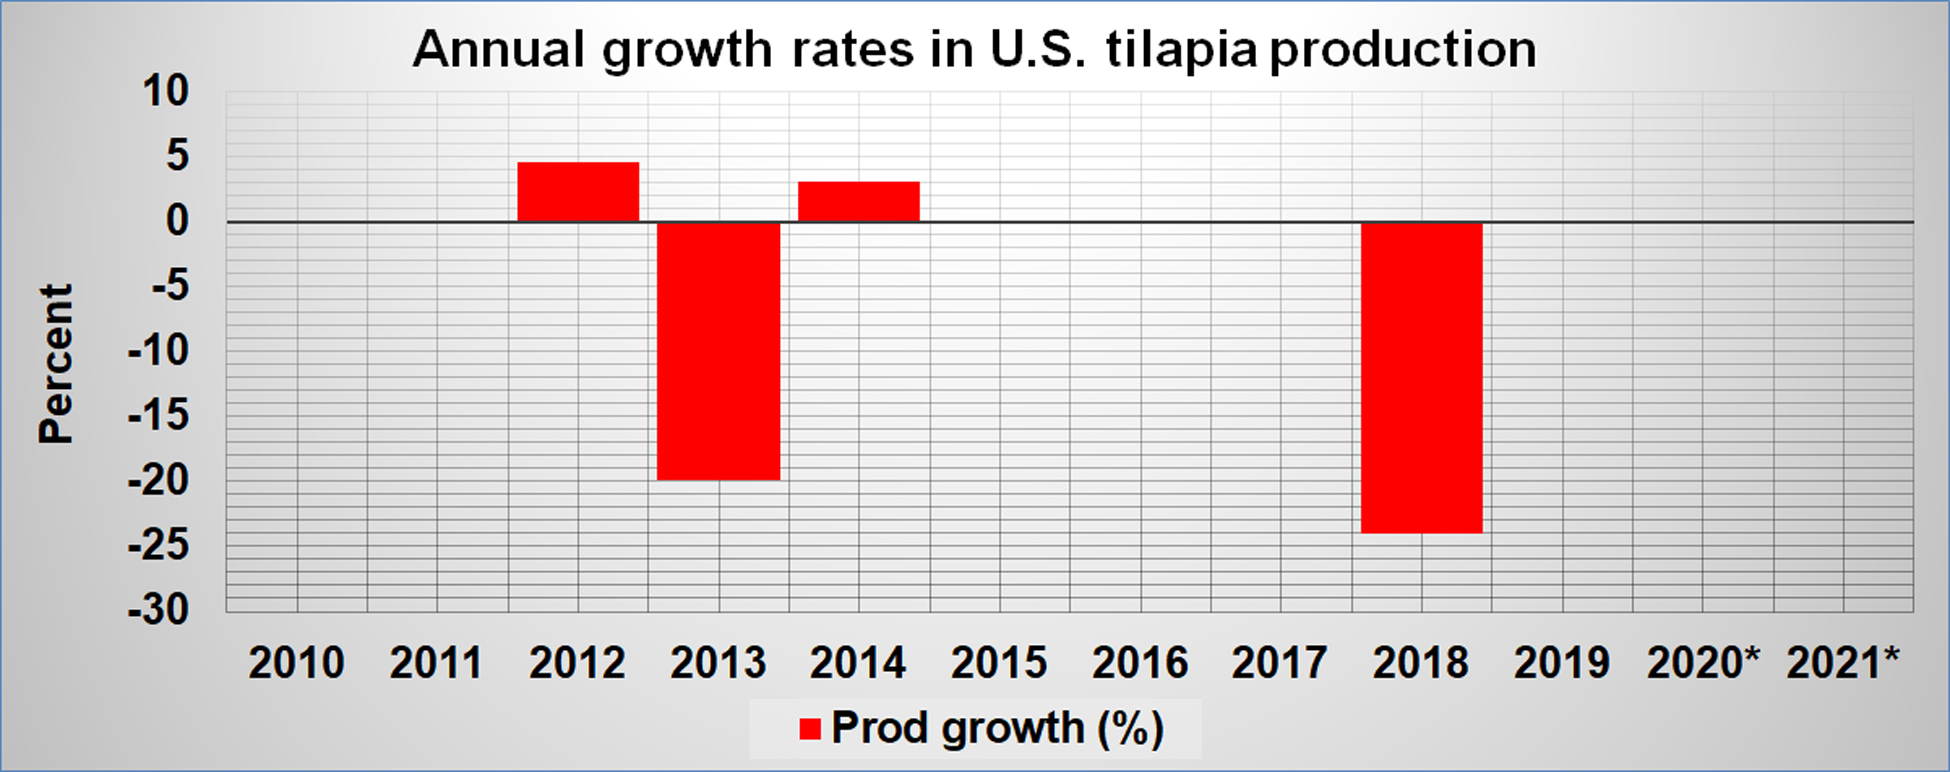 tilapia-prod-growth-usa.jpg